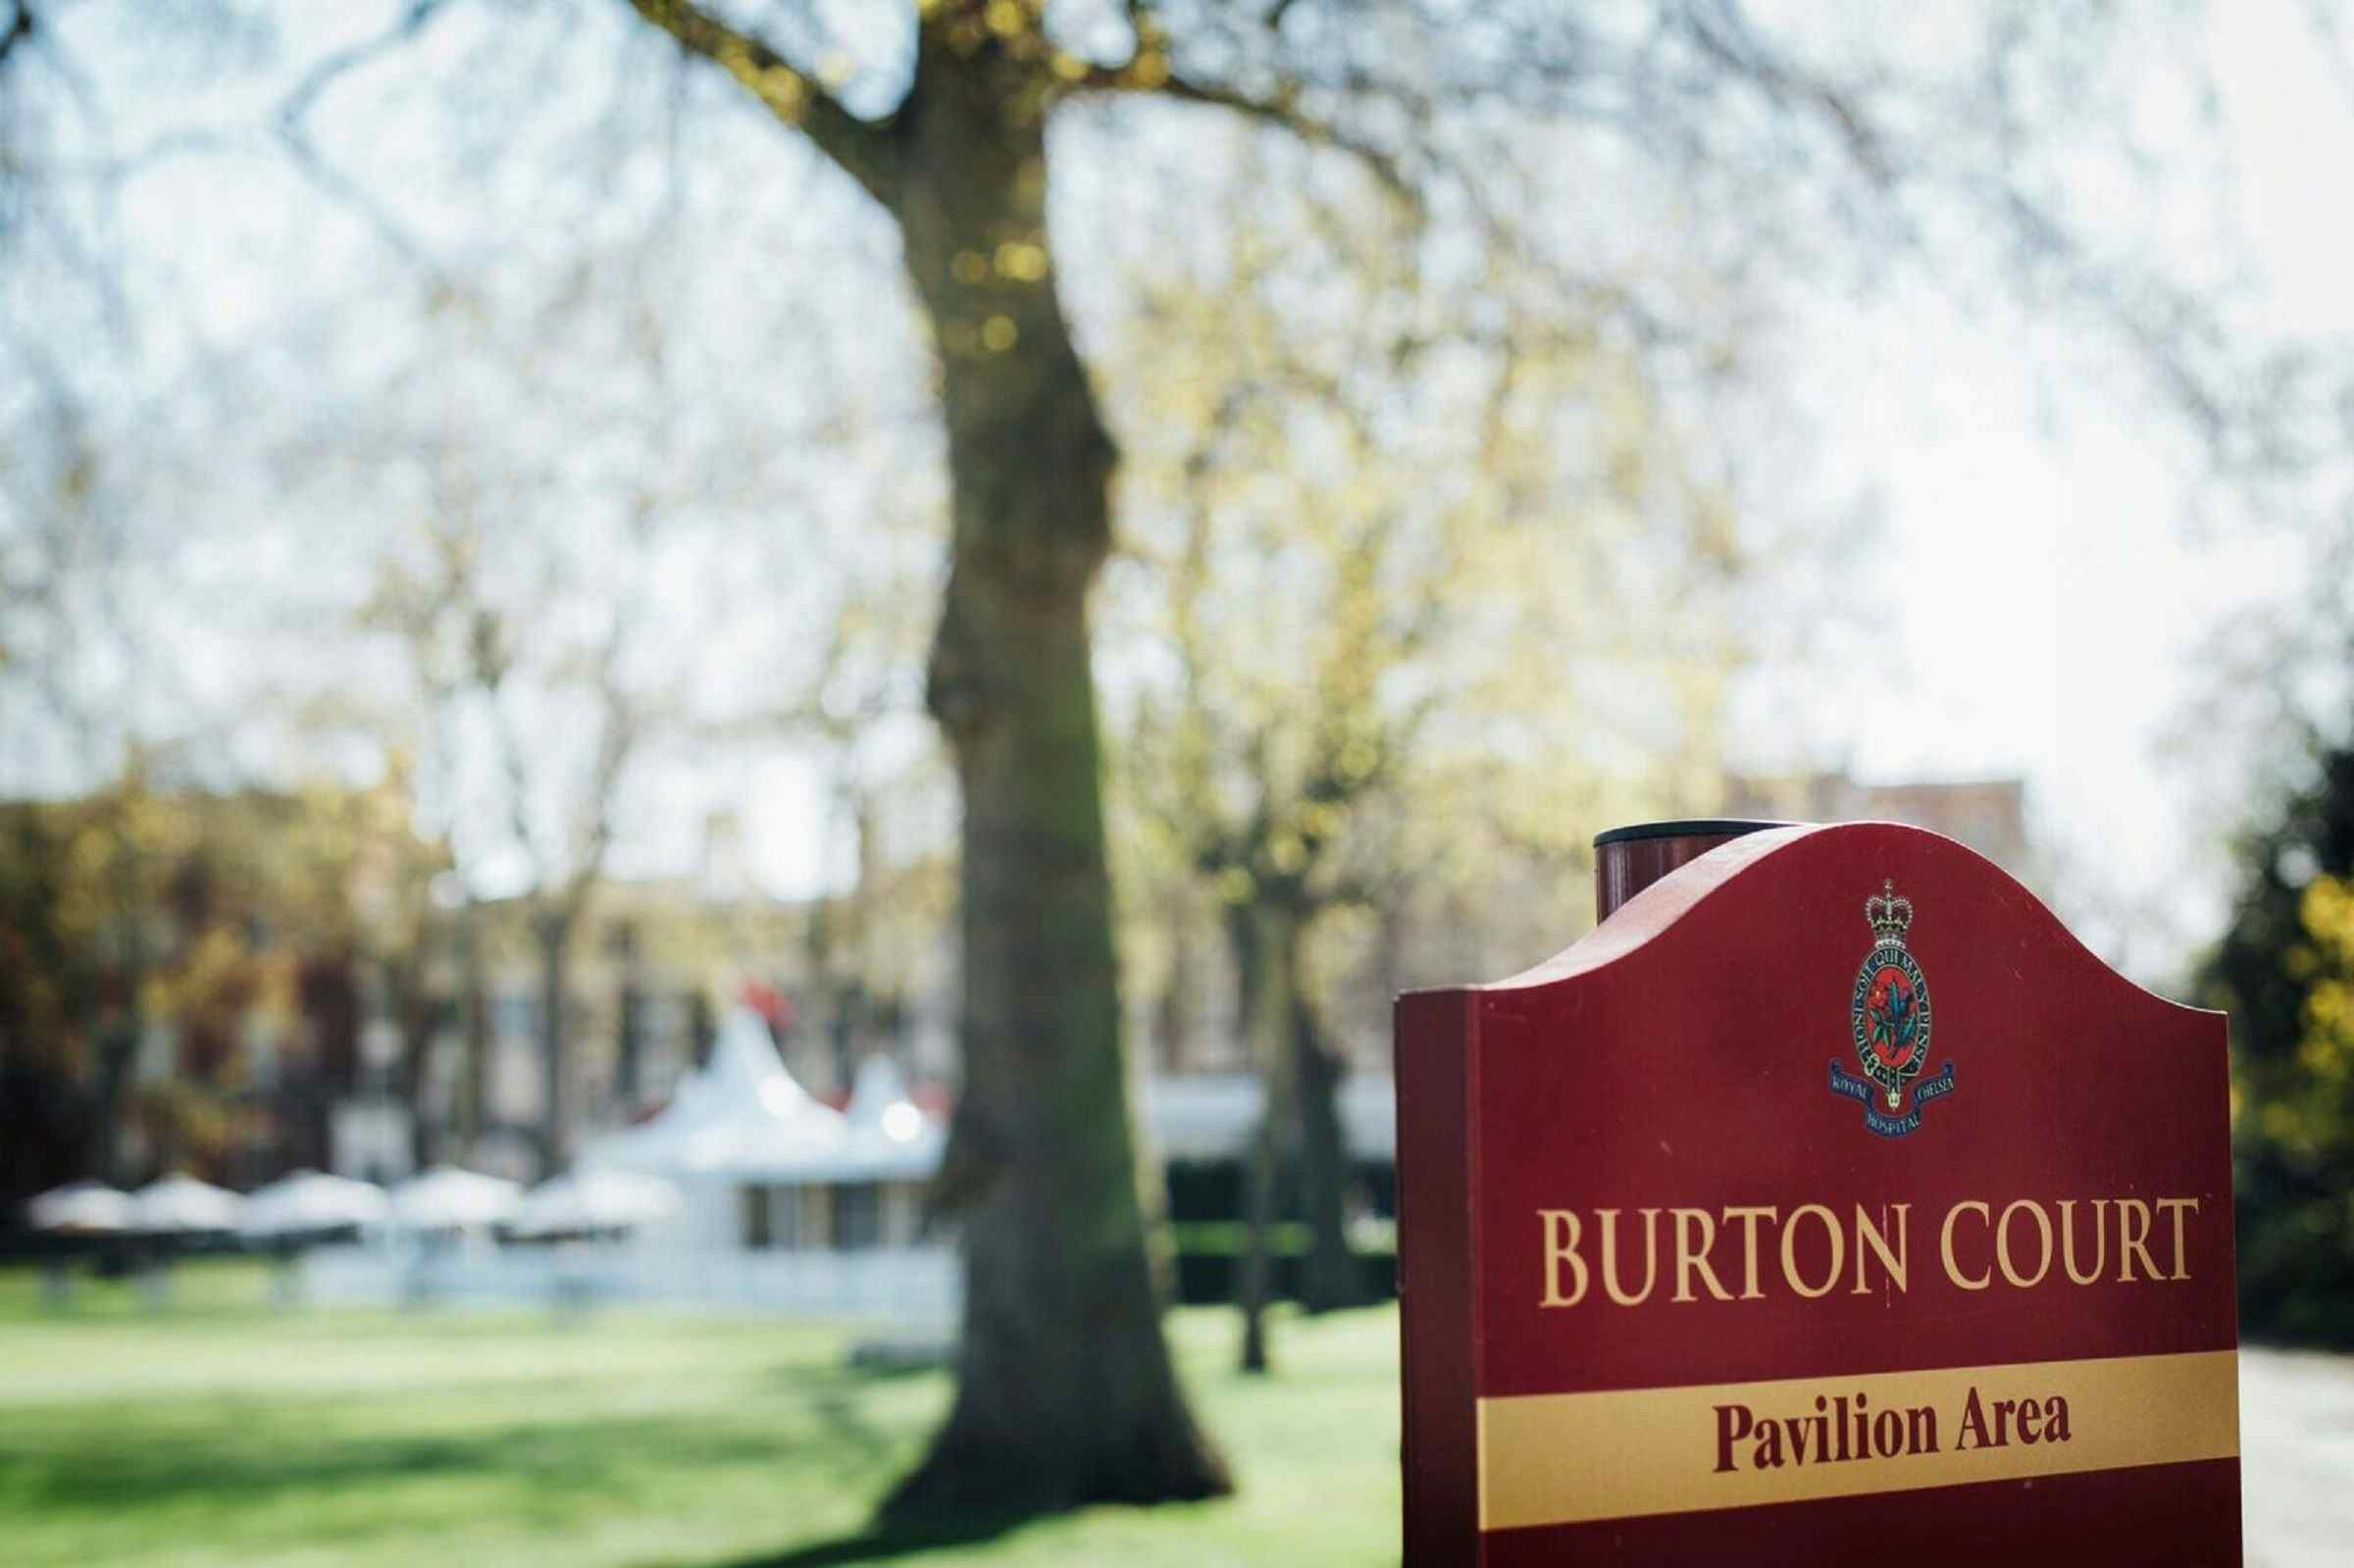 Burton Court - Cricket pitch and Pavilion, Royal Hospital Chelsea